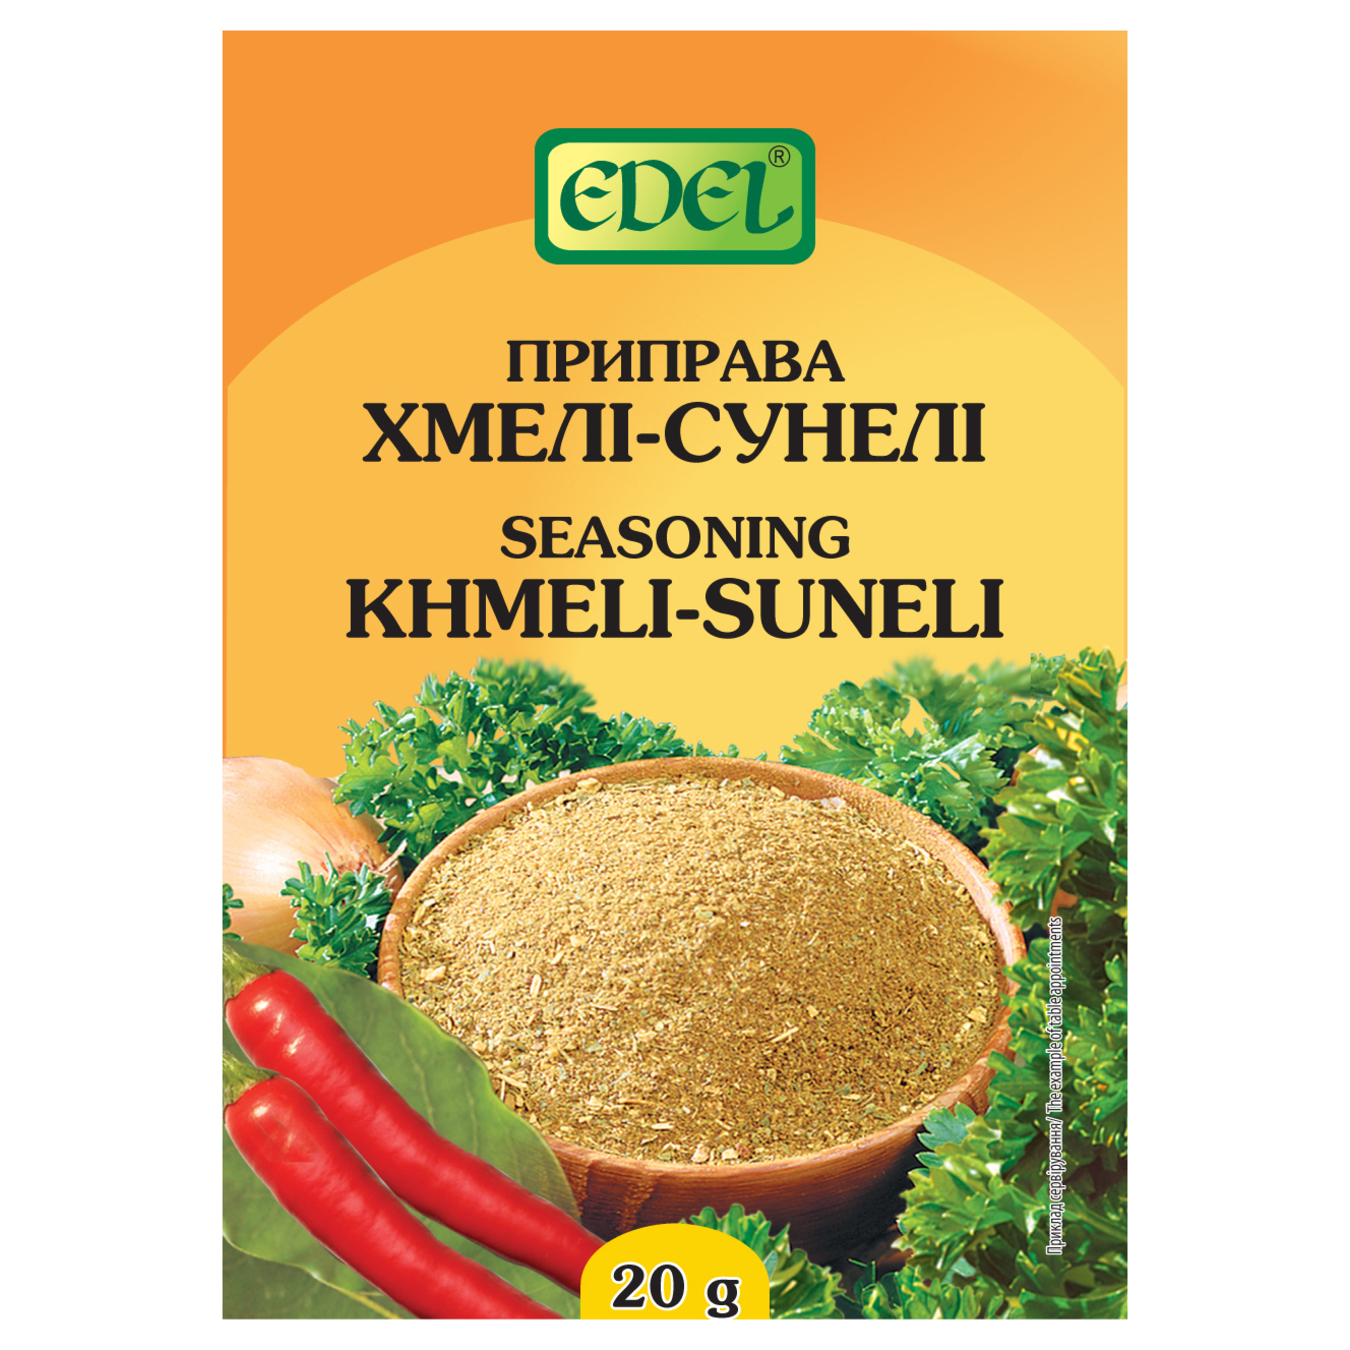 Edel Khmeli-Suneli Spice
20g